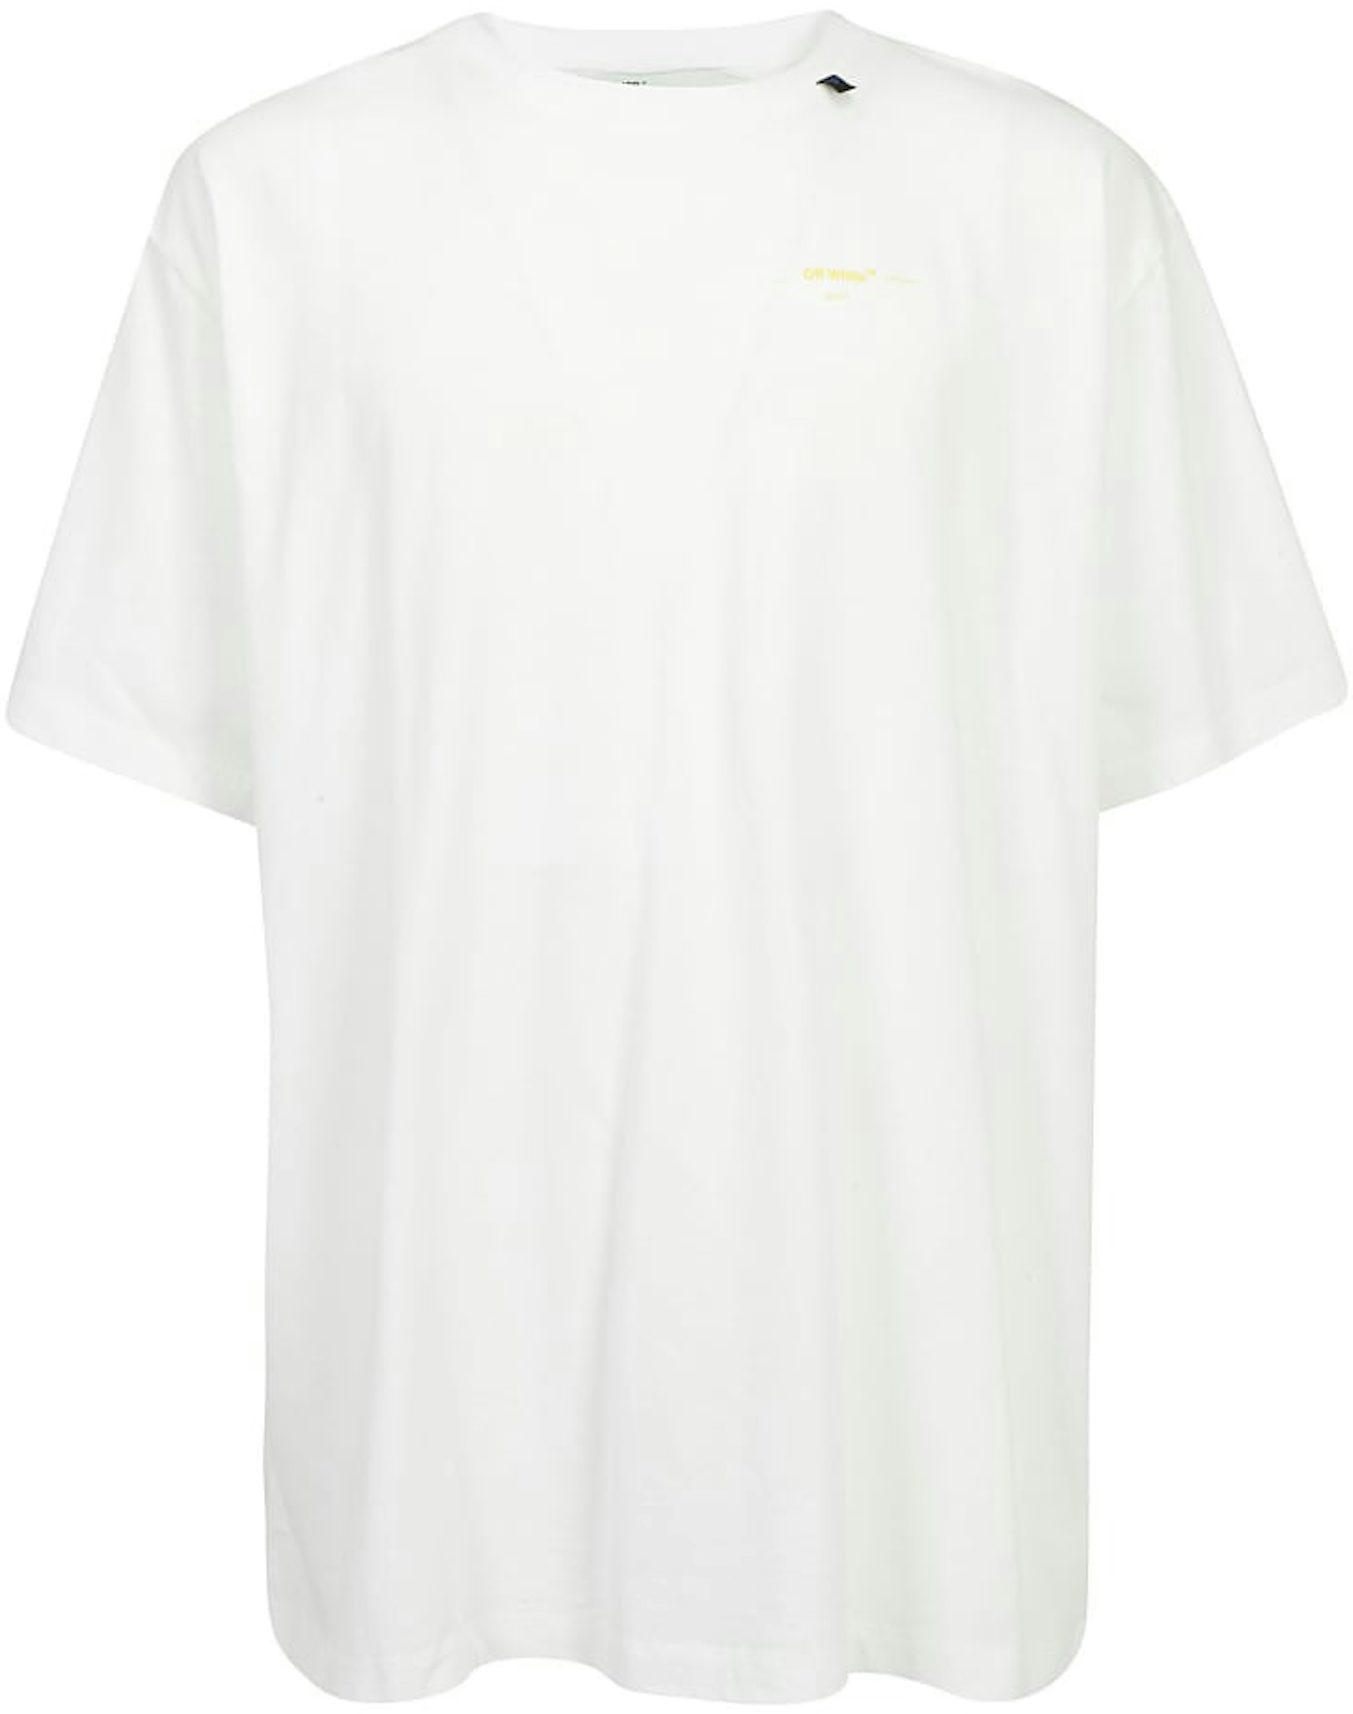 Off-White c/o Virgil Abloh 2019 Crew Neck T-Shirt - Orange T-Shirts,  Clothing - WOWVA54380